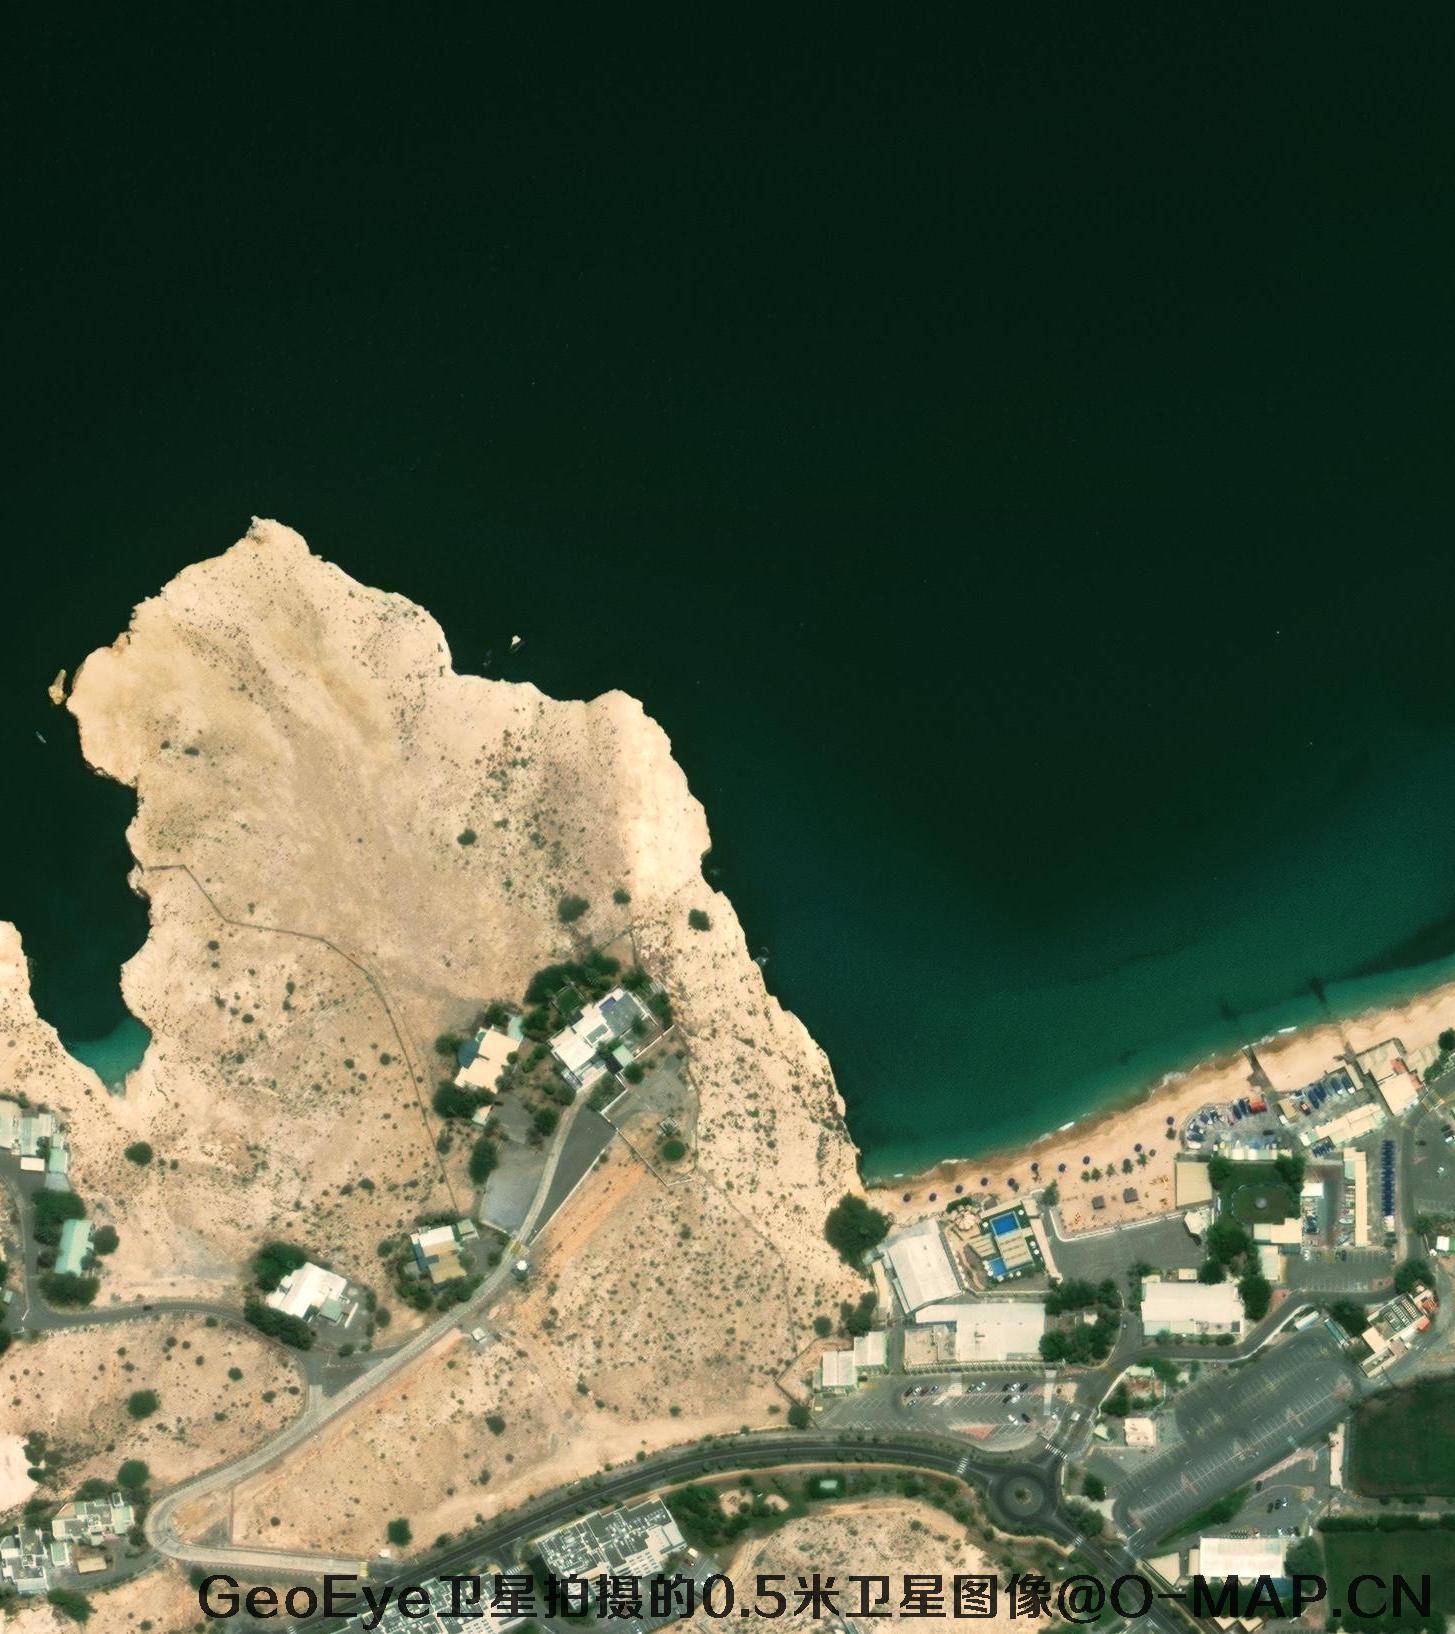  GeoEye卫星拍摄的0.5米卫星图像